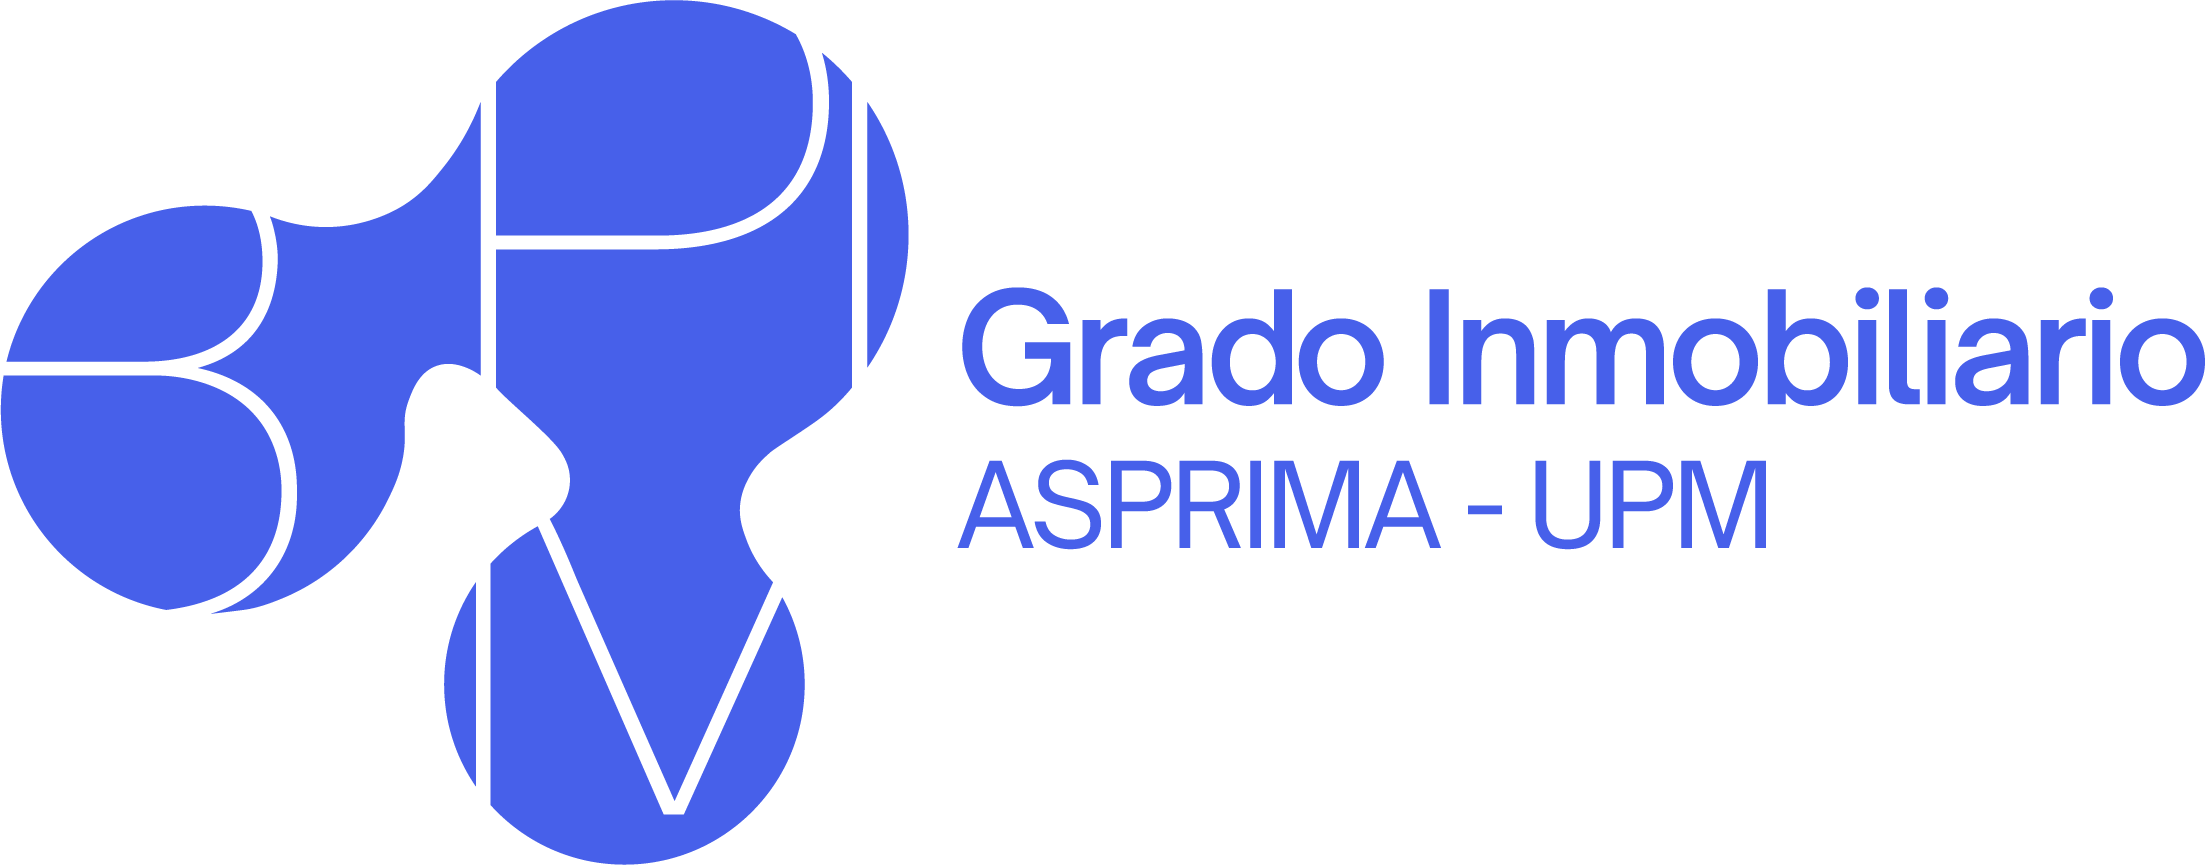 Grado inmobiliario ASPRIMA - UPM